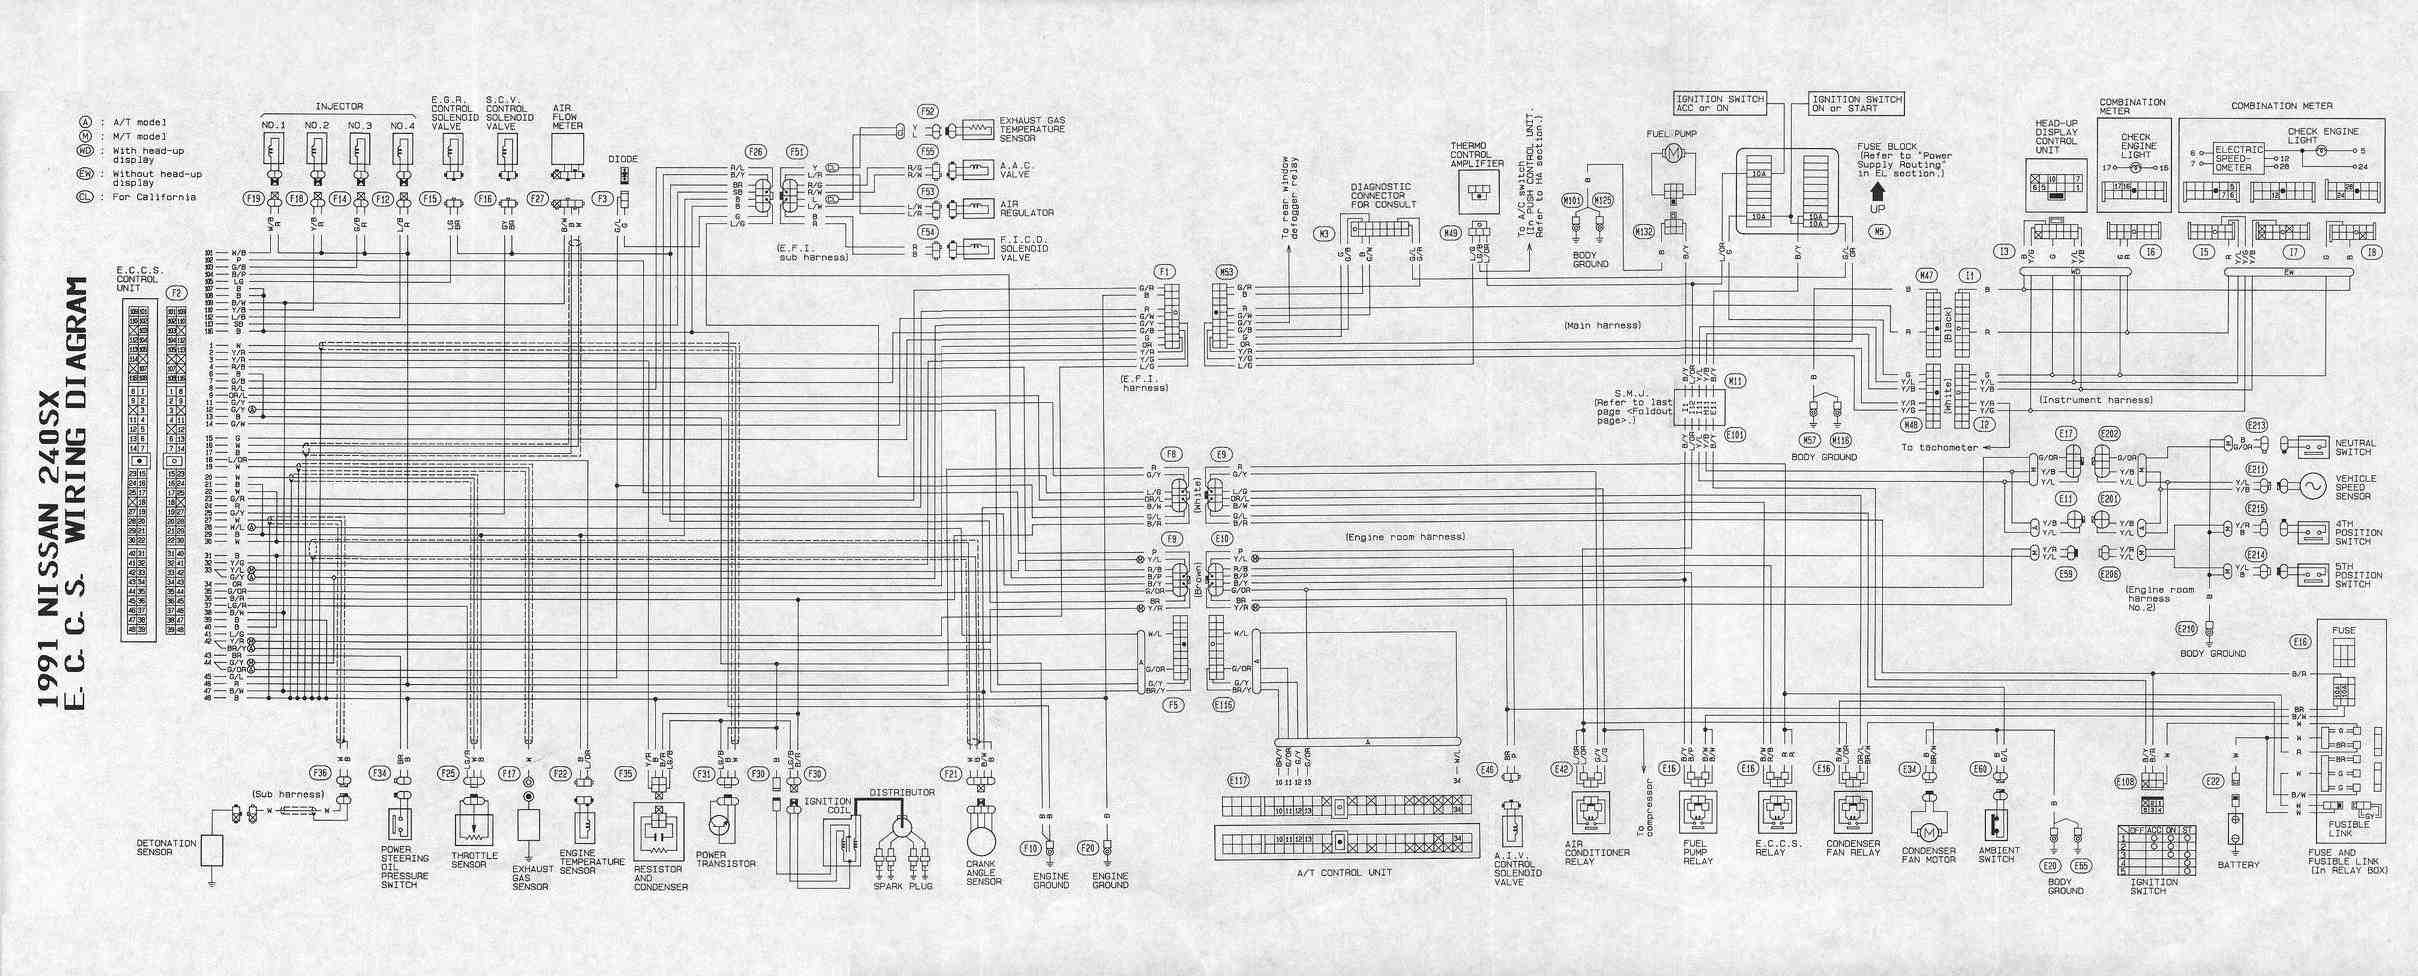 Nissan Car Pdf Manual Wiring Diagram, 1990 Nissan 240sx Wiring Diagram